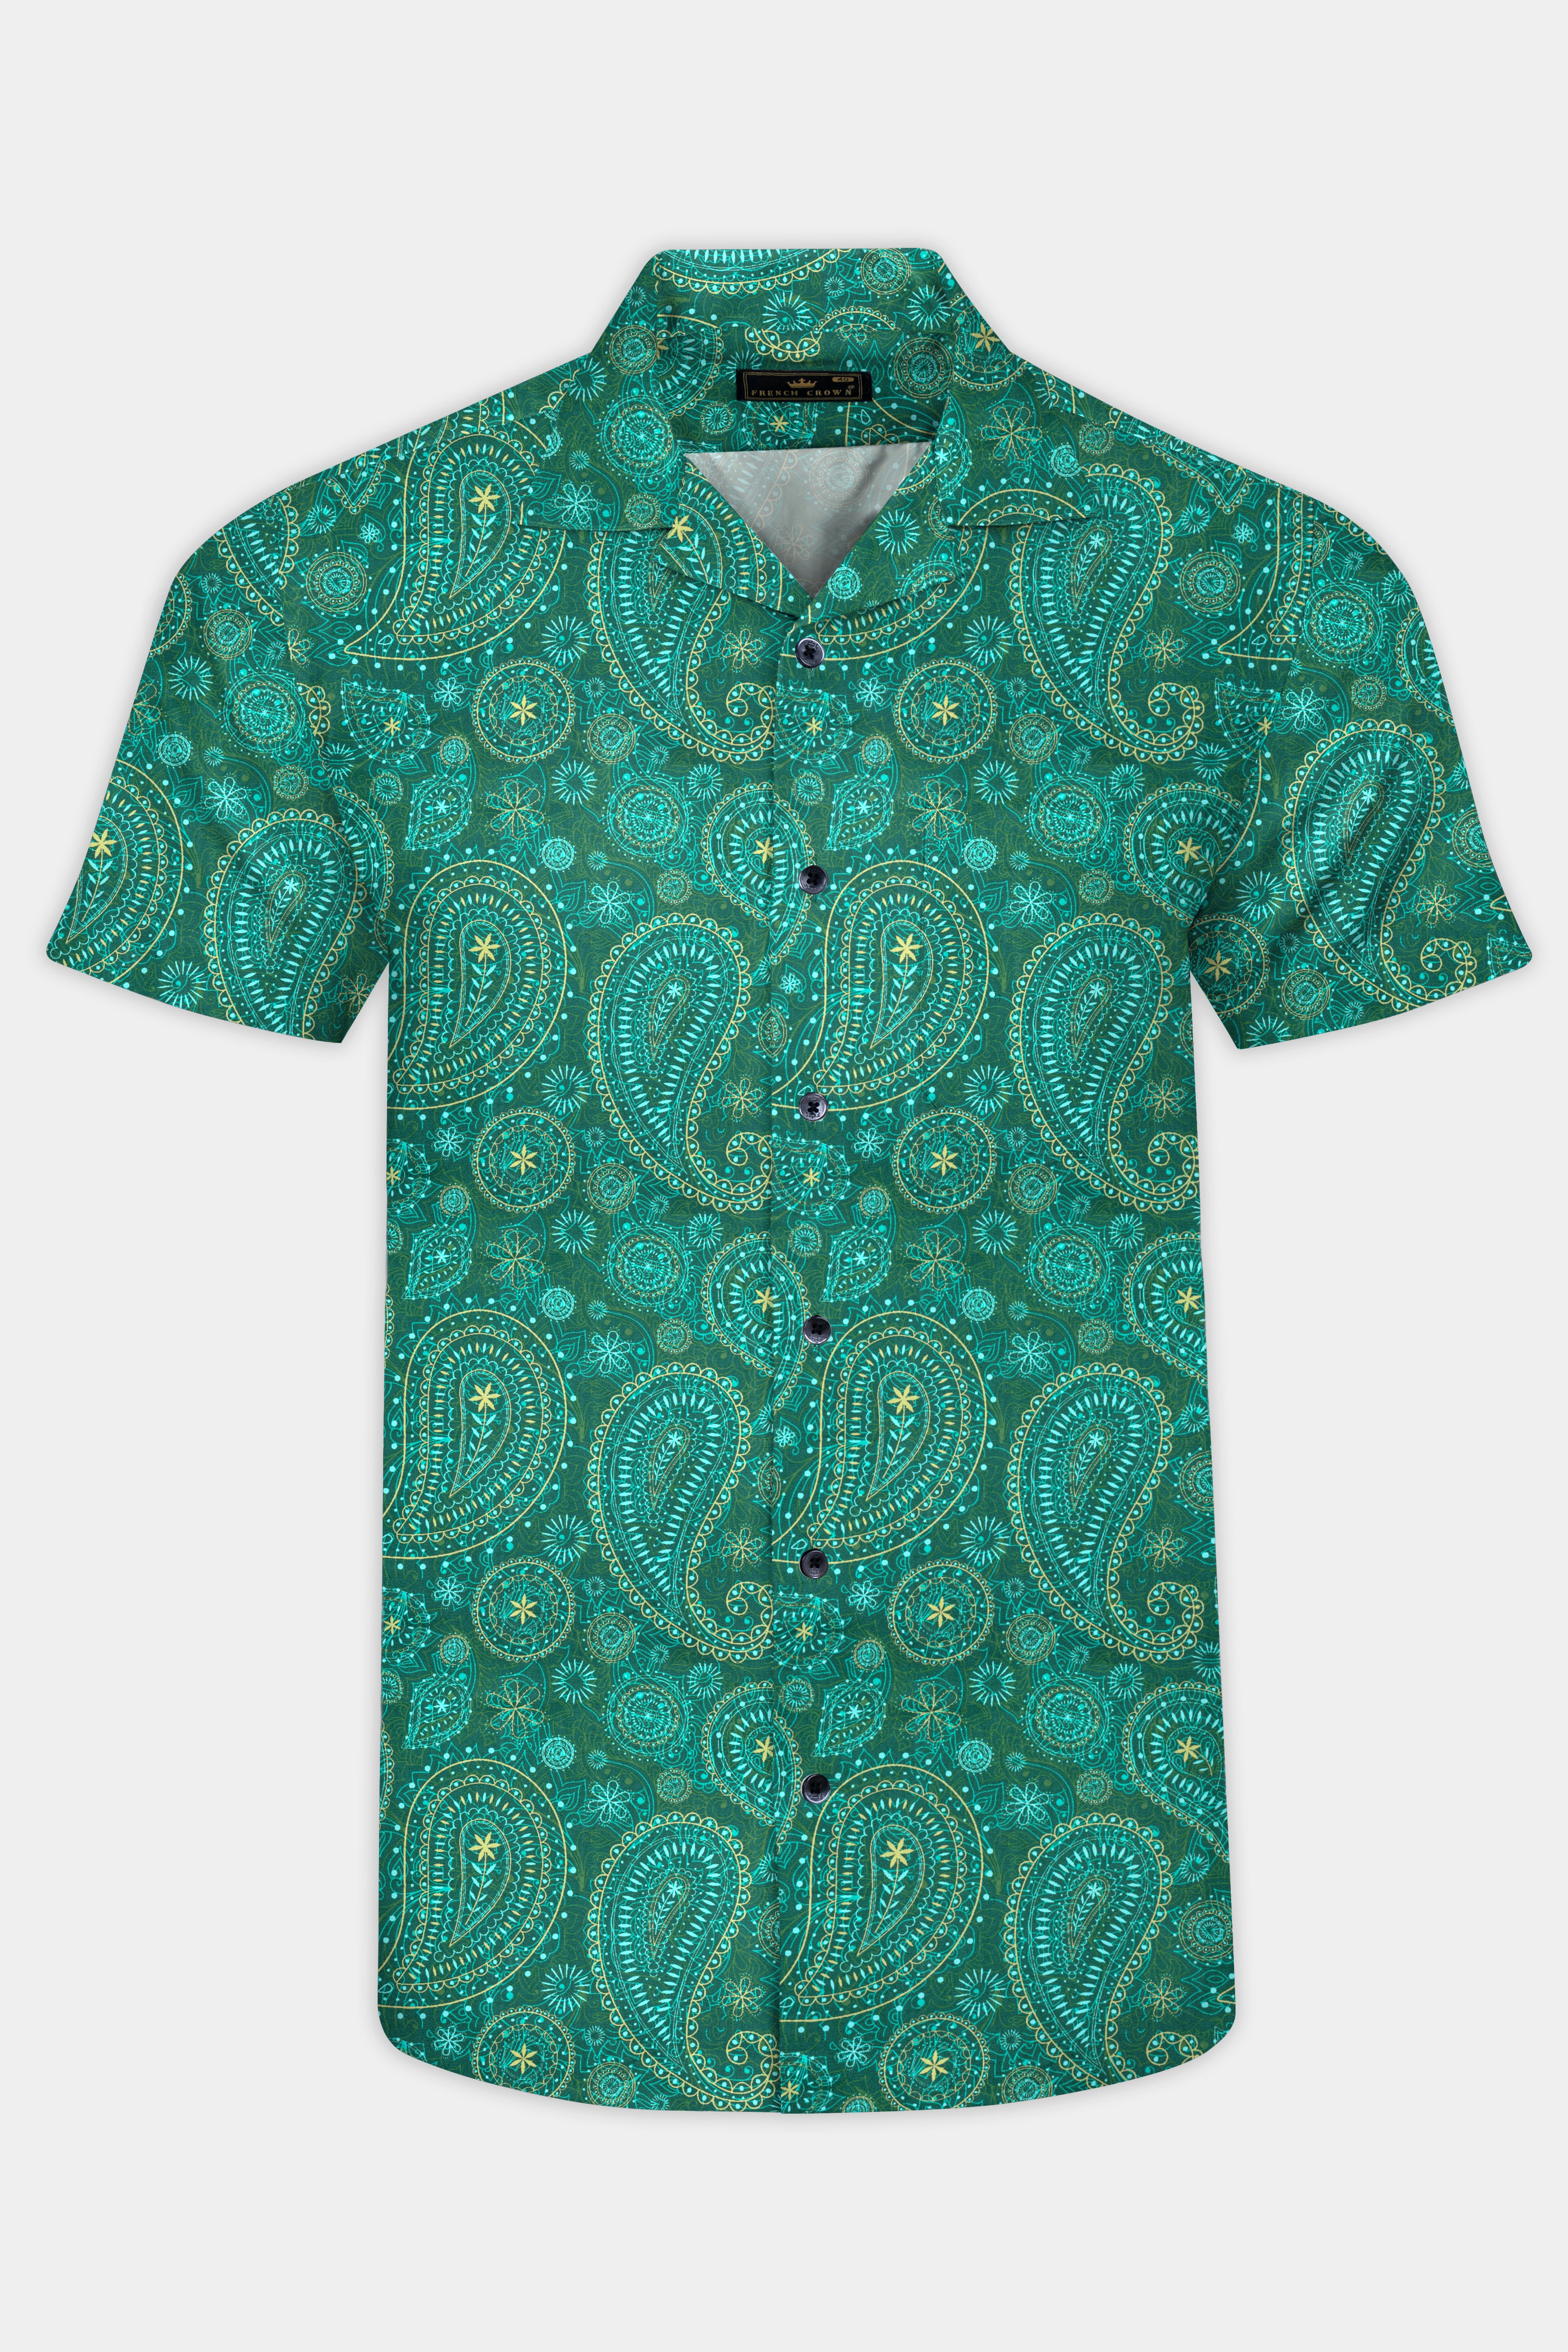 Viridian Green Paisley Printed Super Soft Premium Cotton Shirt